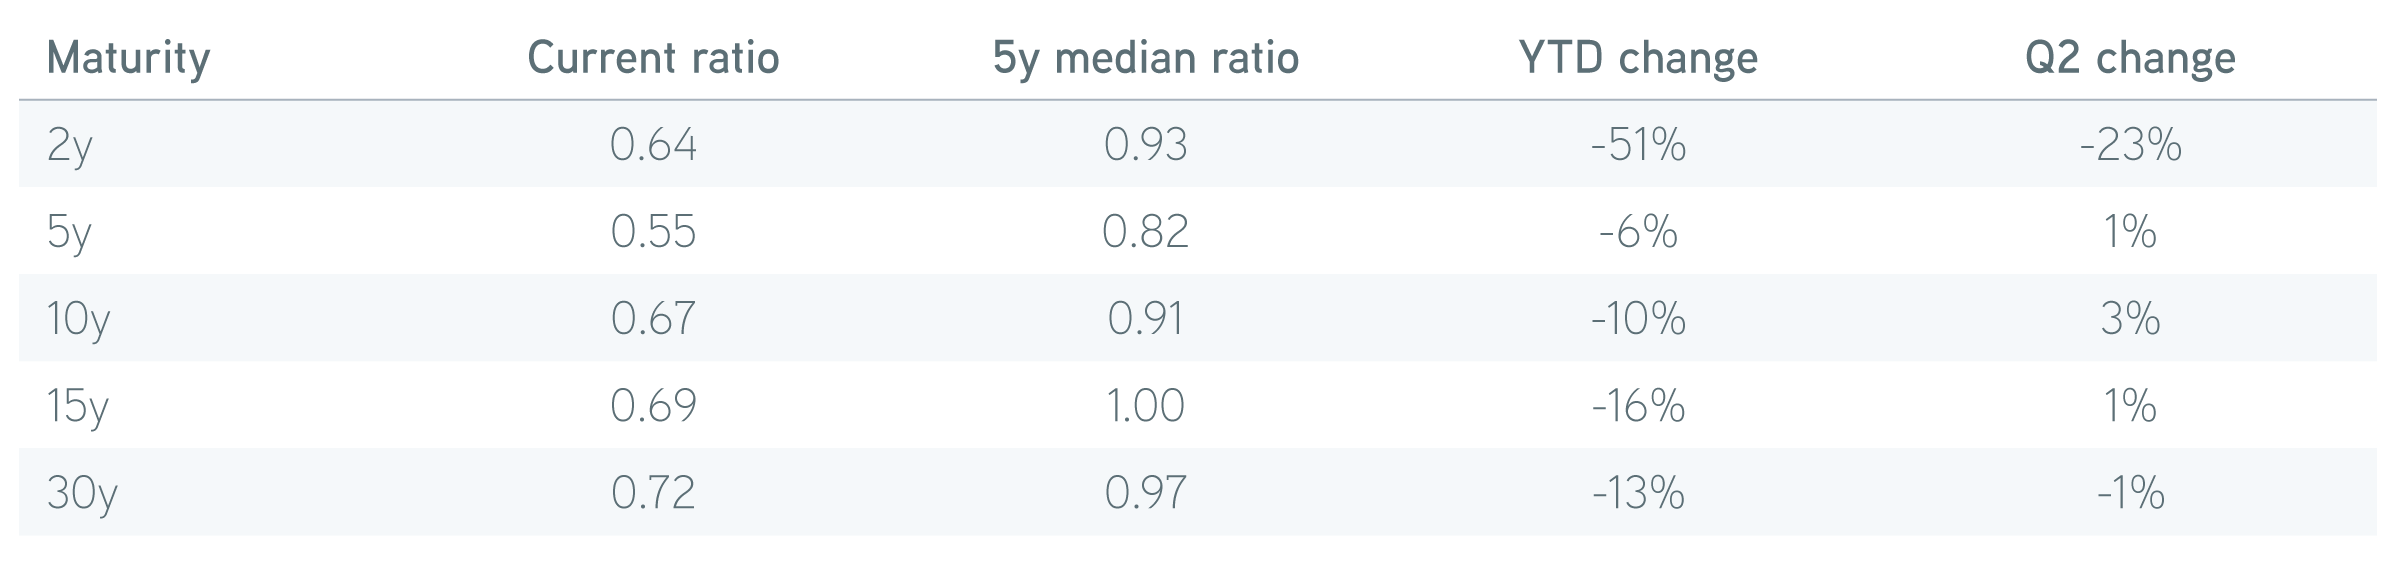 muni-treasury yield ratios for web.png